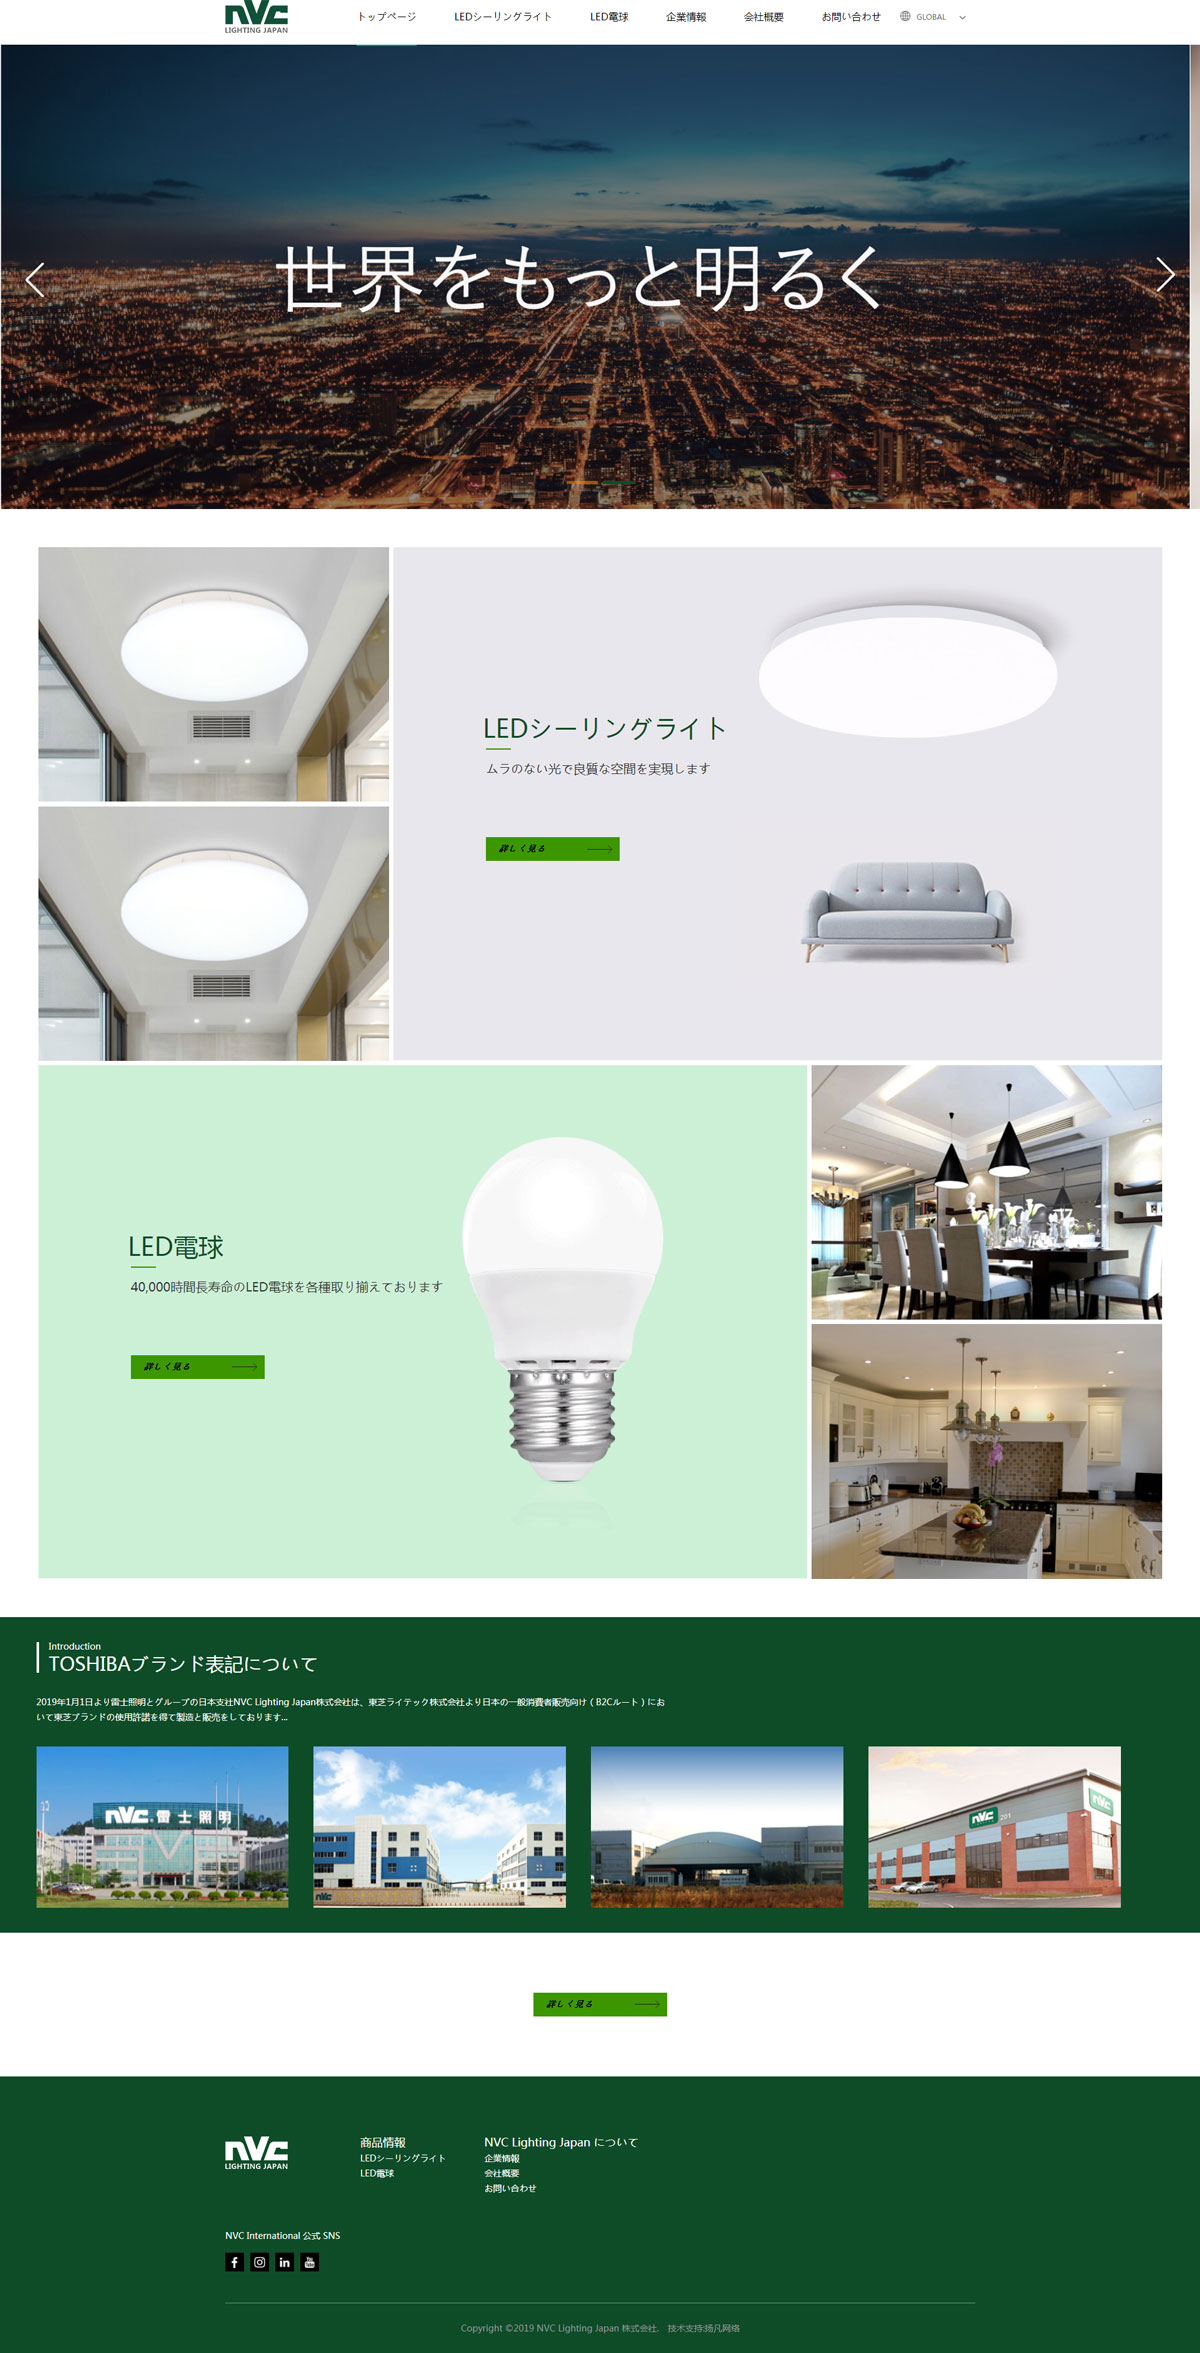 NVC-Lighting-Japan-株式会社_.jpg